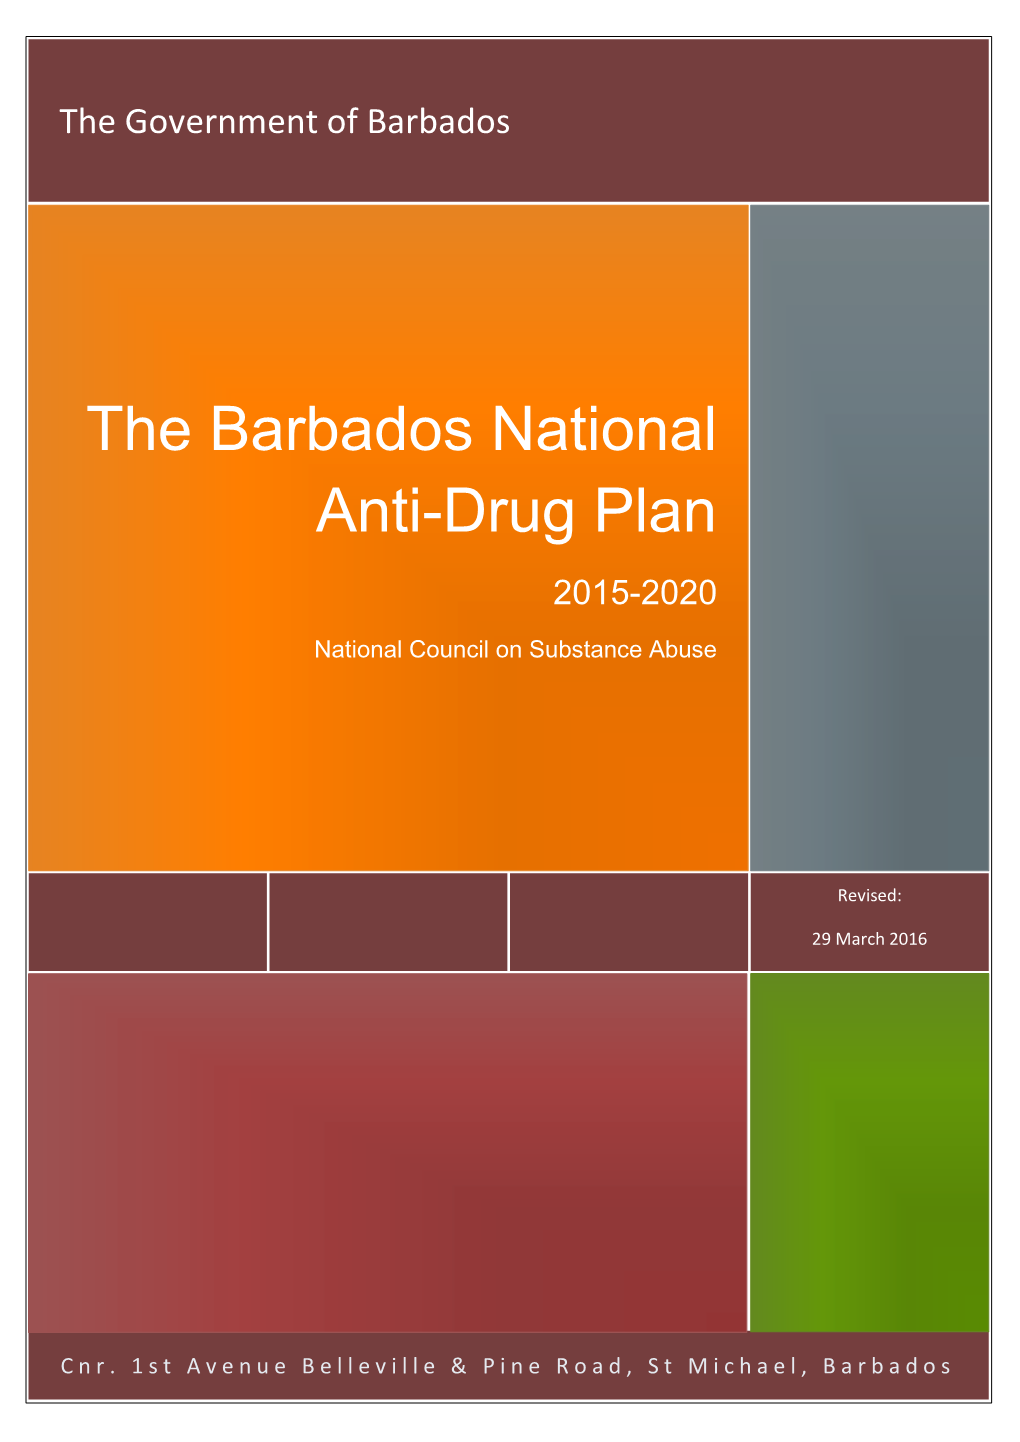 The Barbados National Anti-Drug Plan 2015-2020